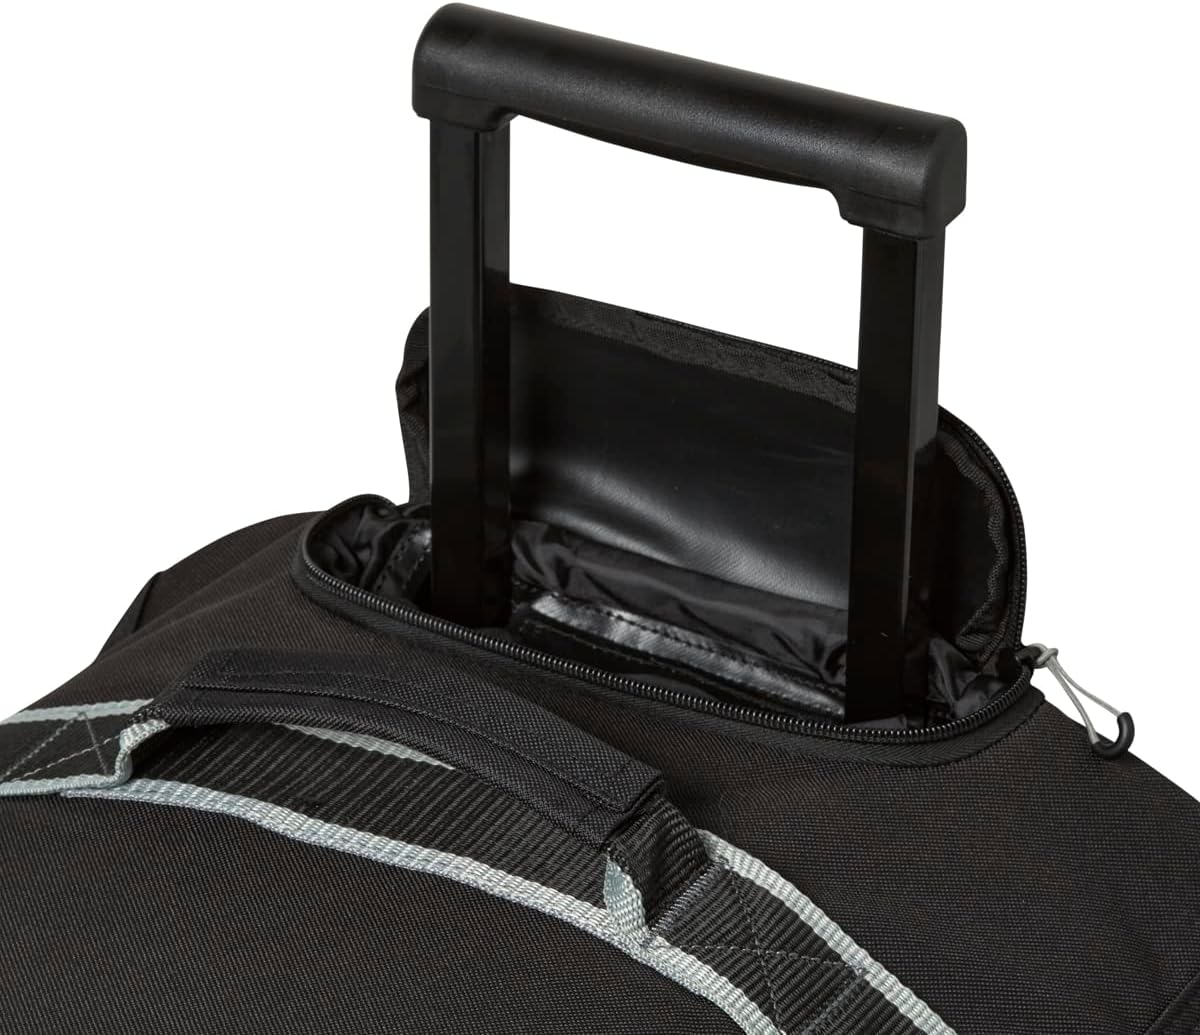 Winnwell Backpack Junior Carry Hockey Bag - The Hockey Shop Source For Sports